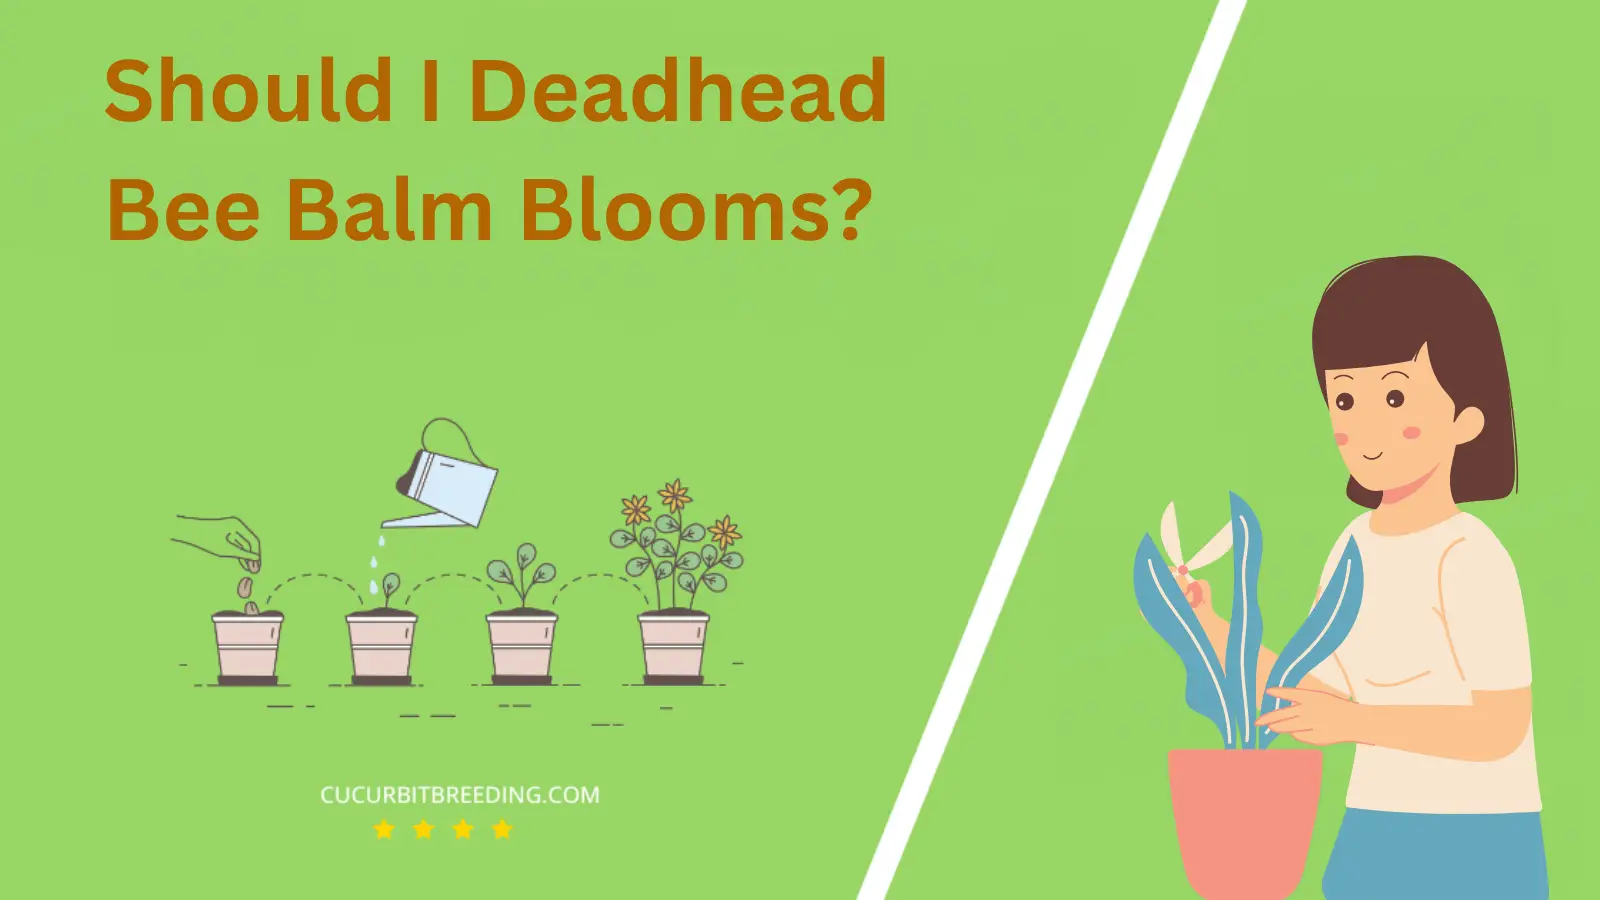 Should I Deadhead Bee Balm Blooms?